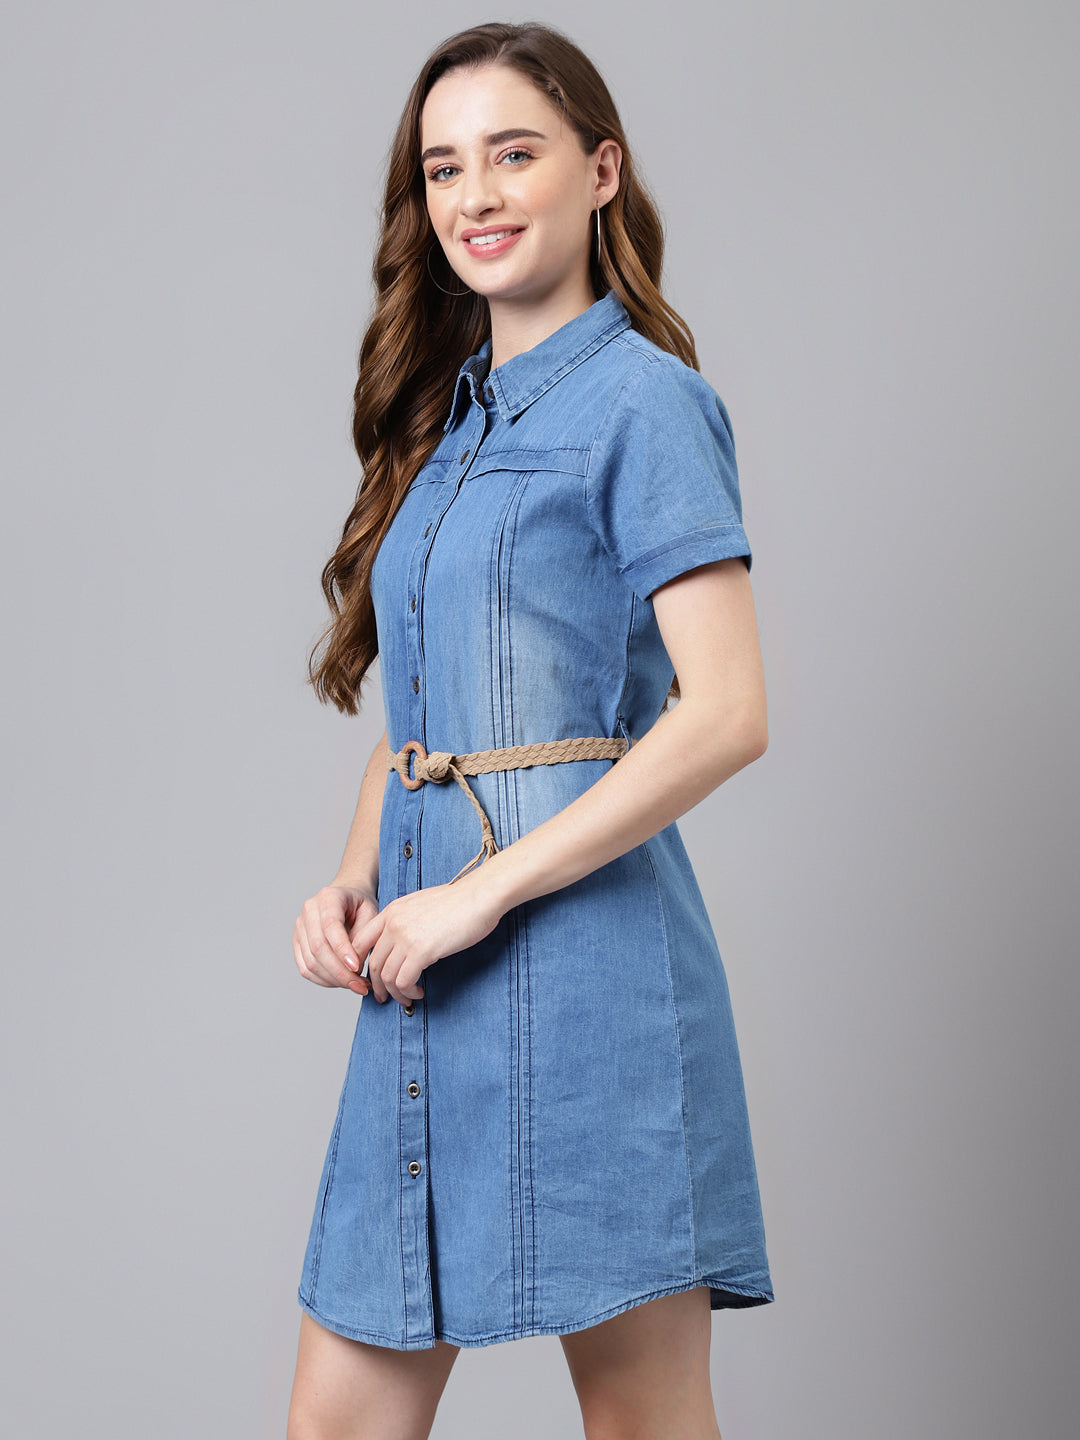 Blue Half Sleeve Solid Normal Shirt Dress